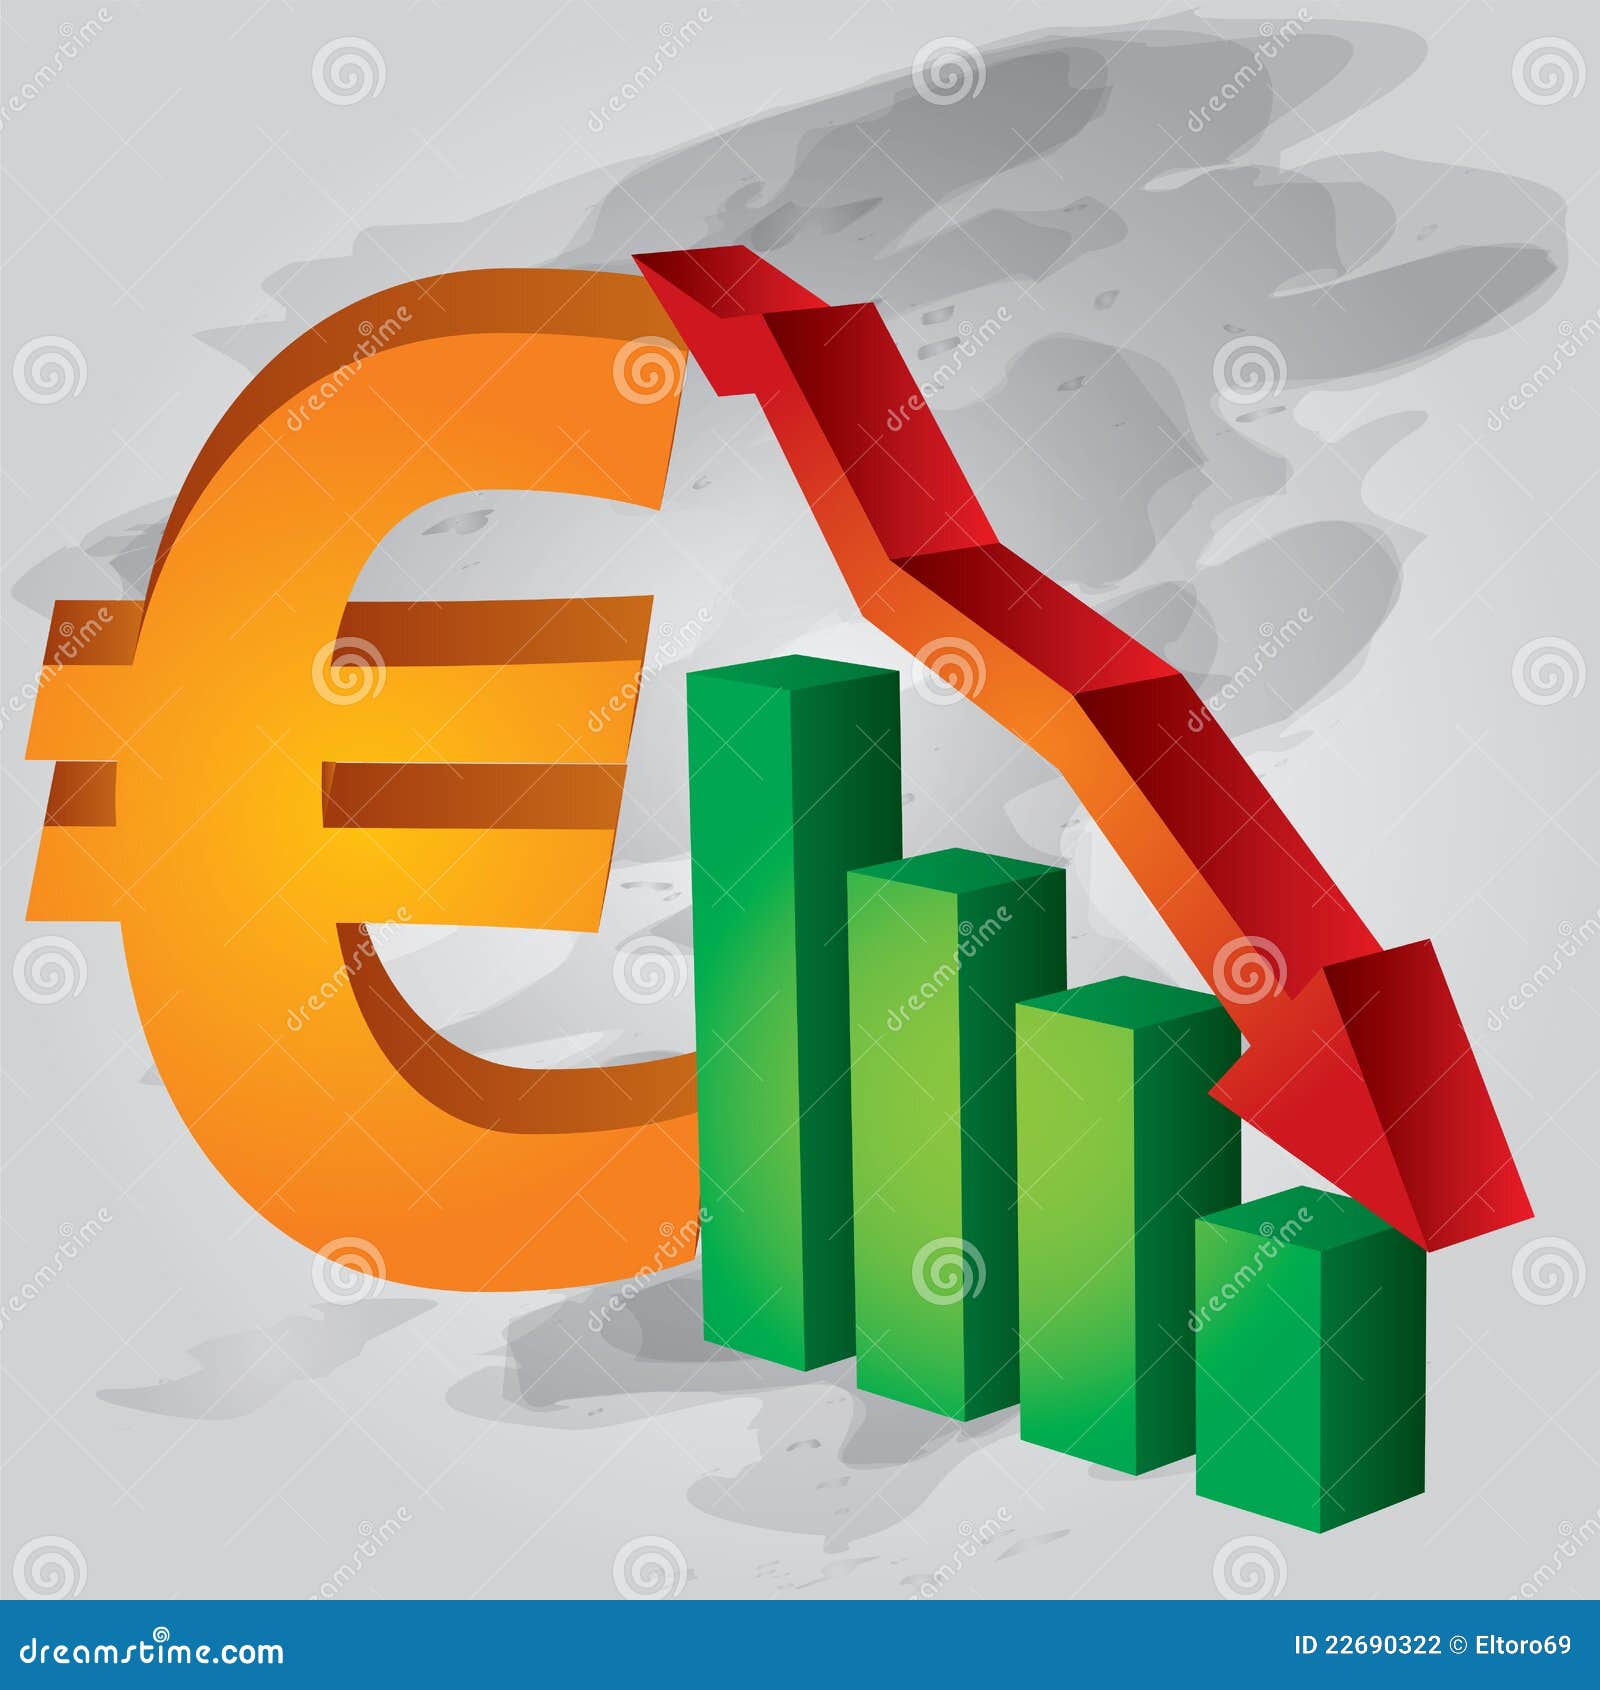 decrease in euro